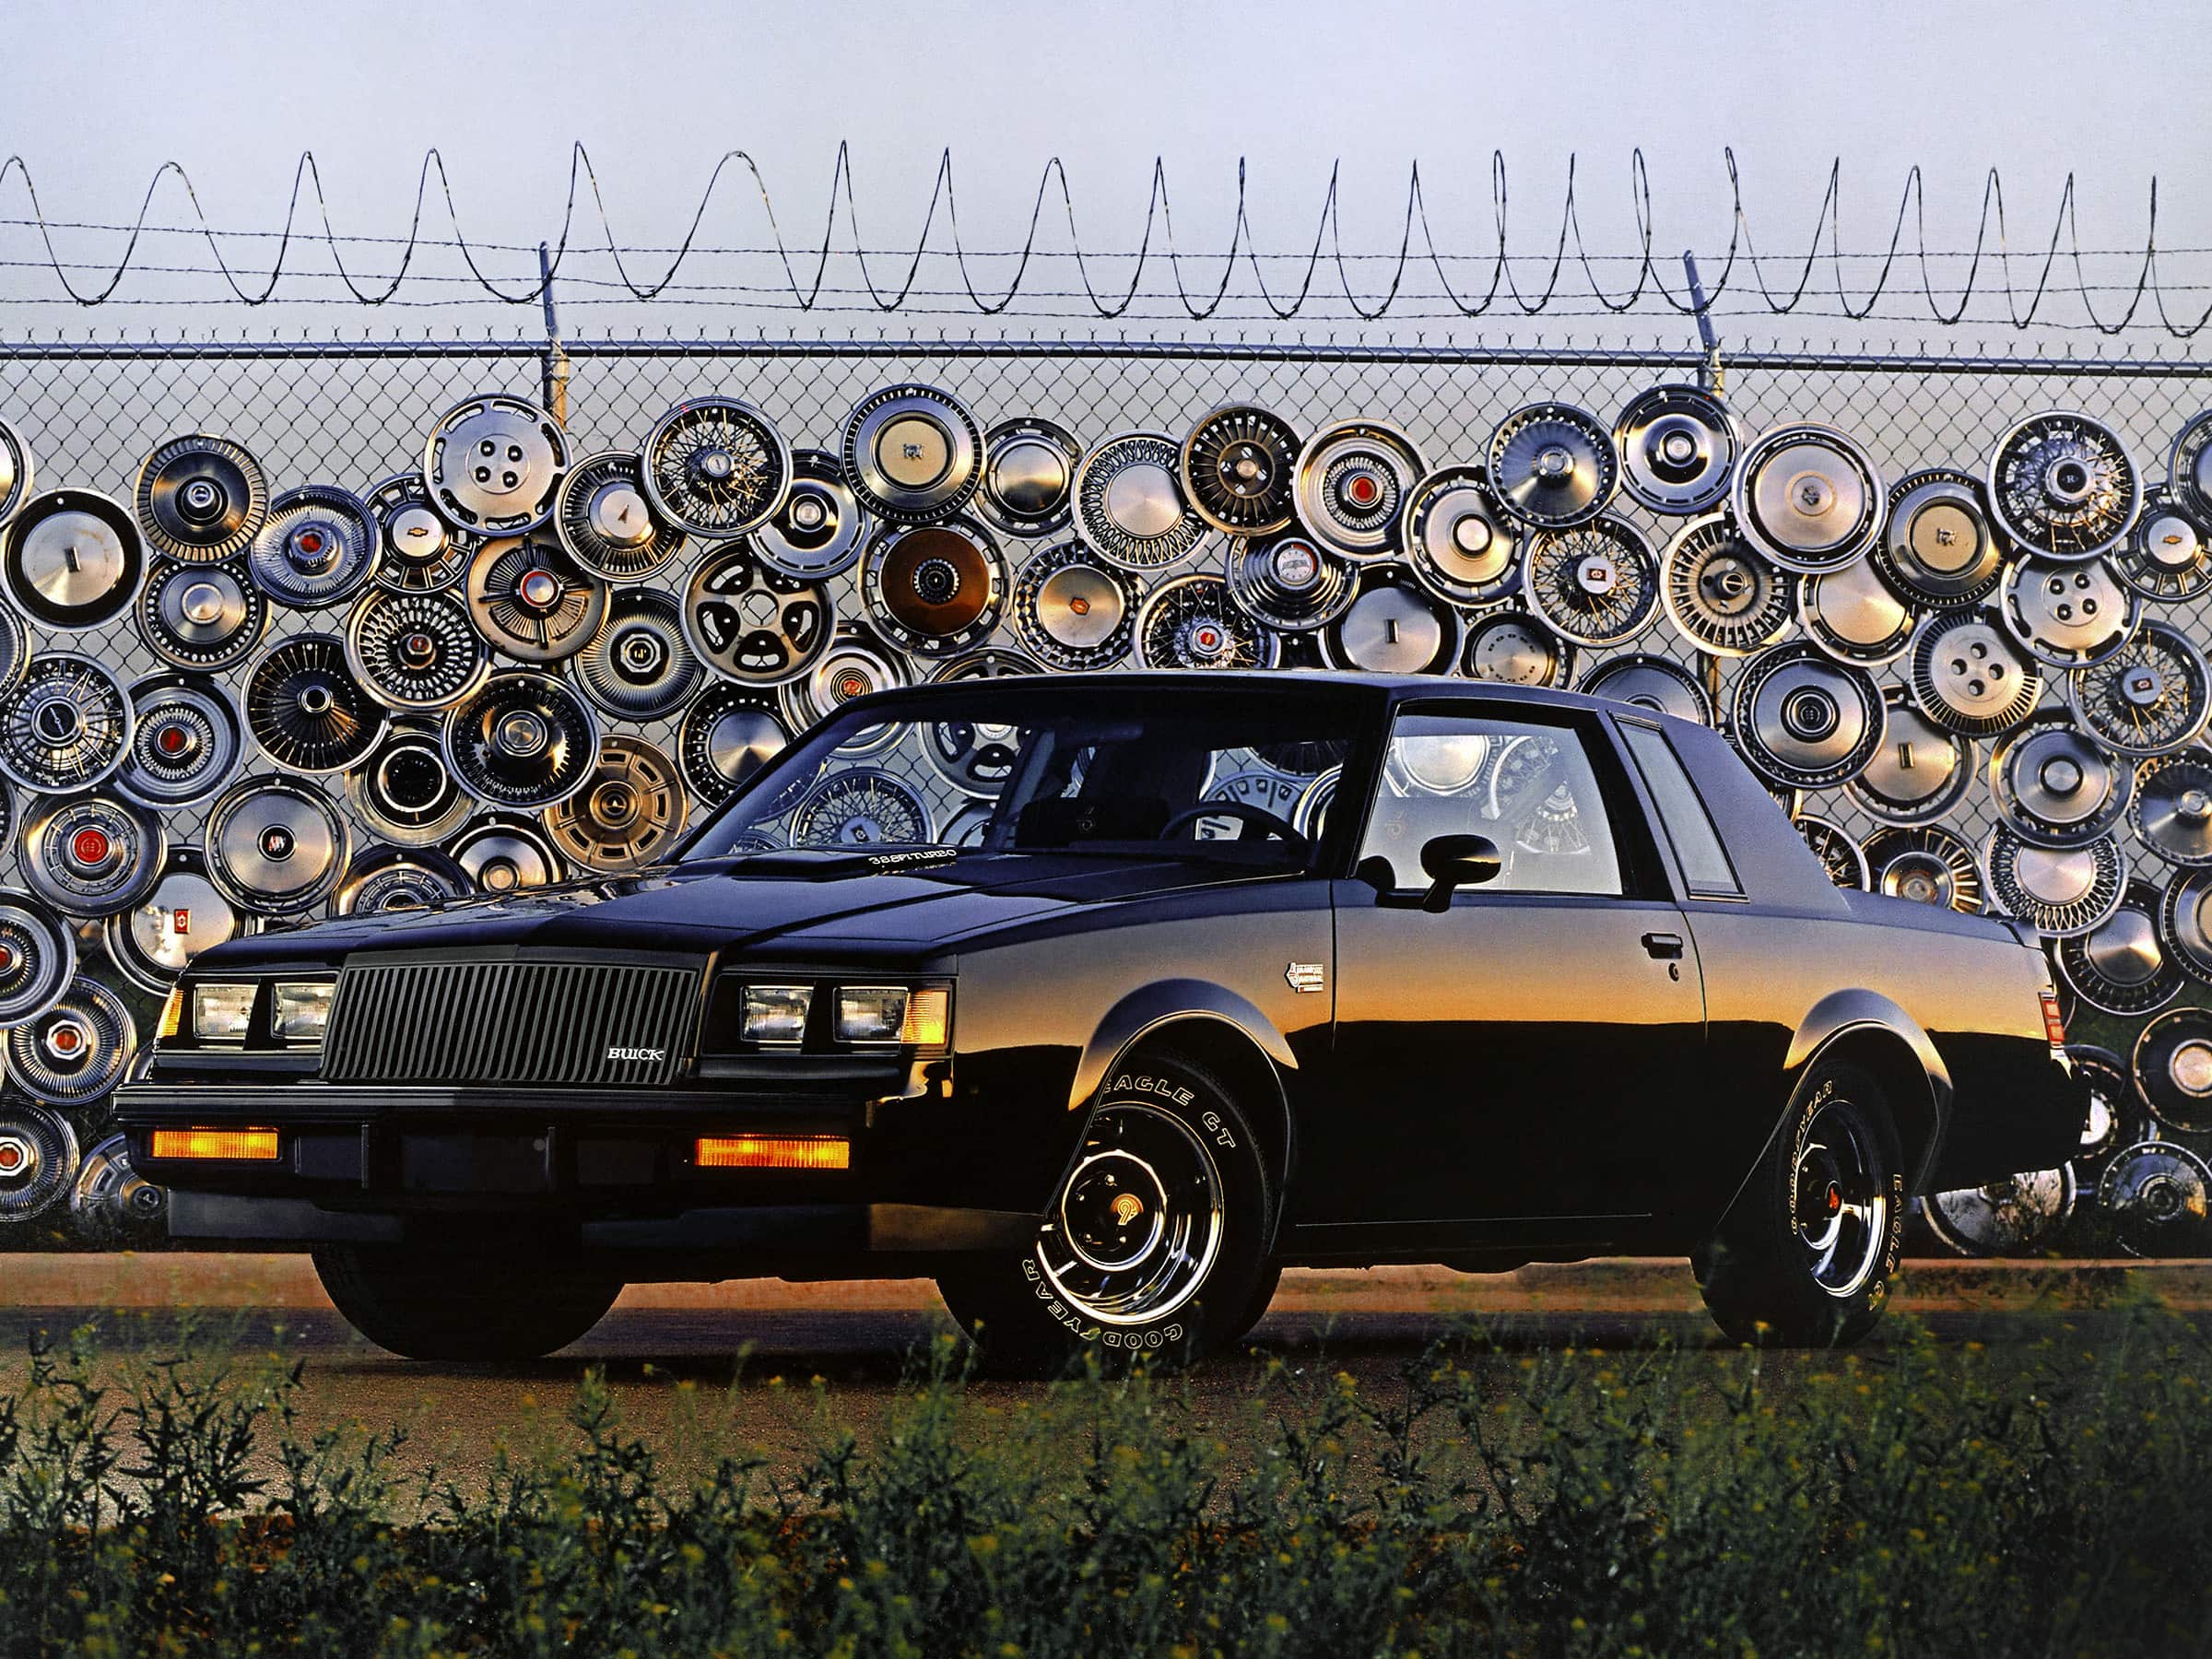 1987 Regal Grand National CX5605-0062R copy| Image Credit: General Motors